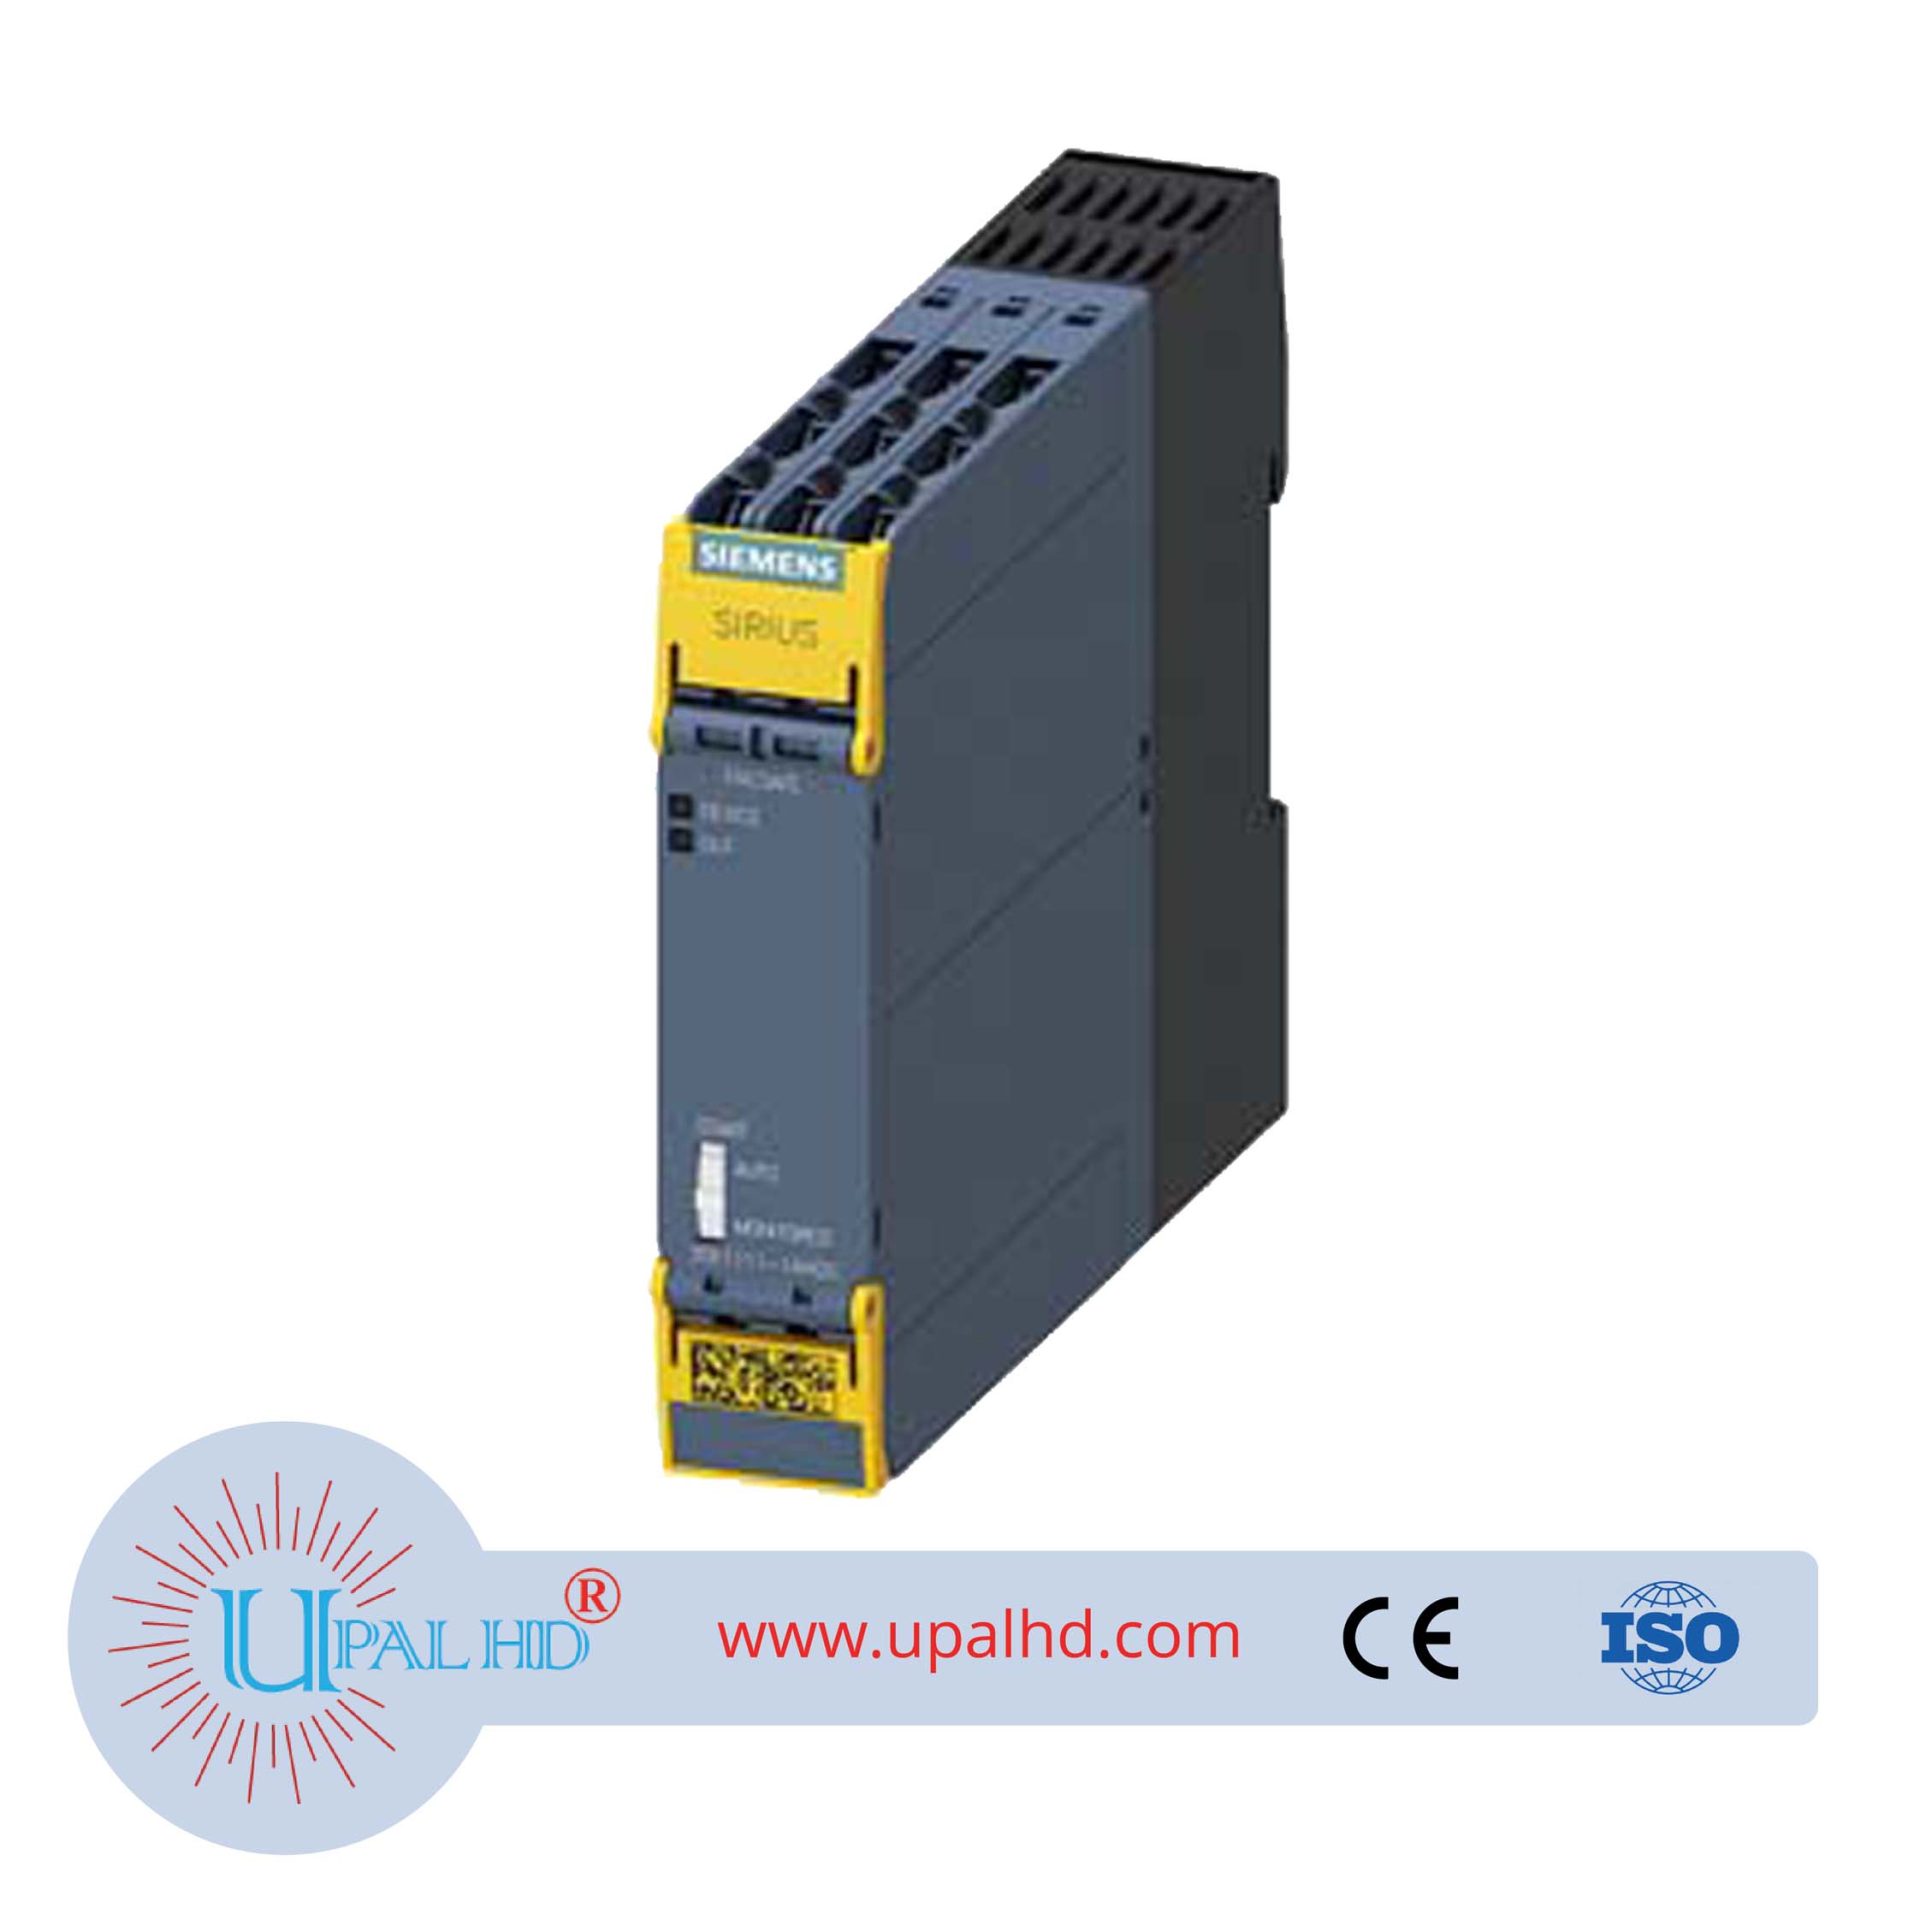 SIRIUS safety switchgear, basic device, 3SK2 20 F-DI, 4 F-DQ, 2 DQ, 2 4V DC